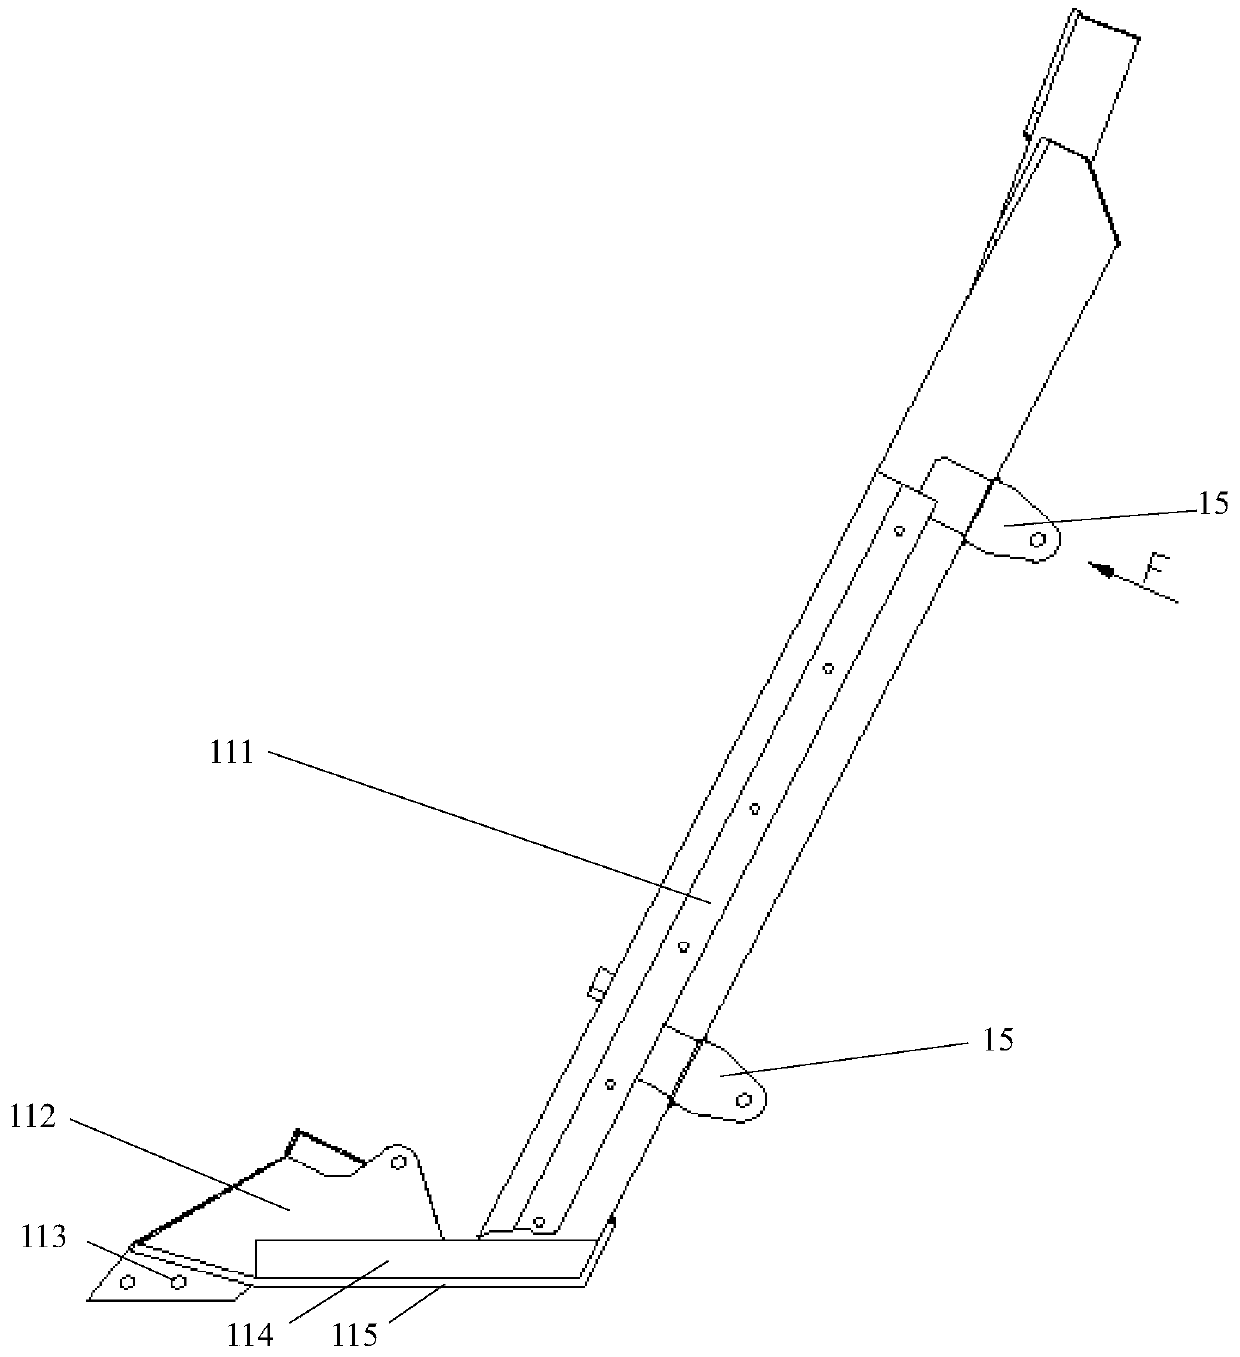 A branch position adjustment mechanism